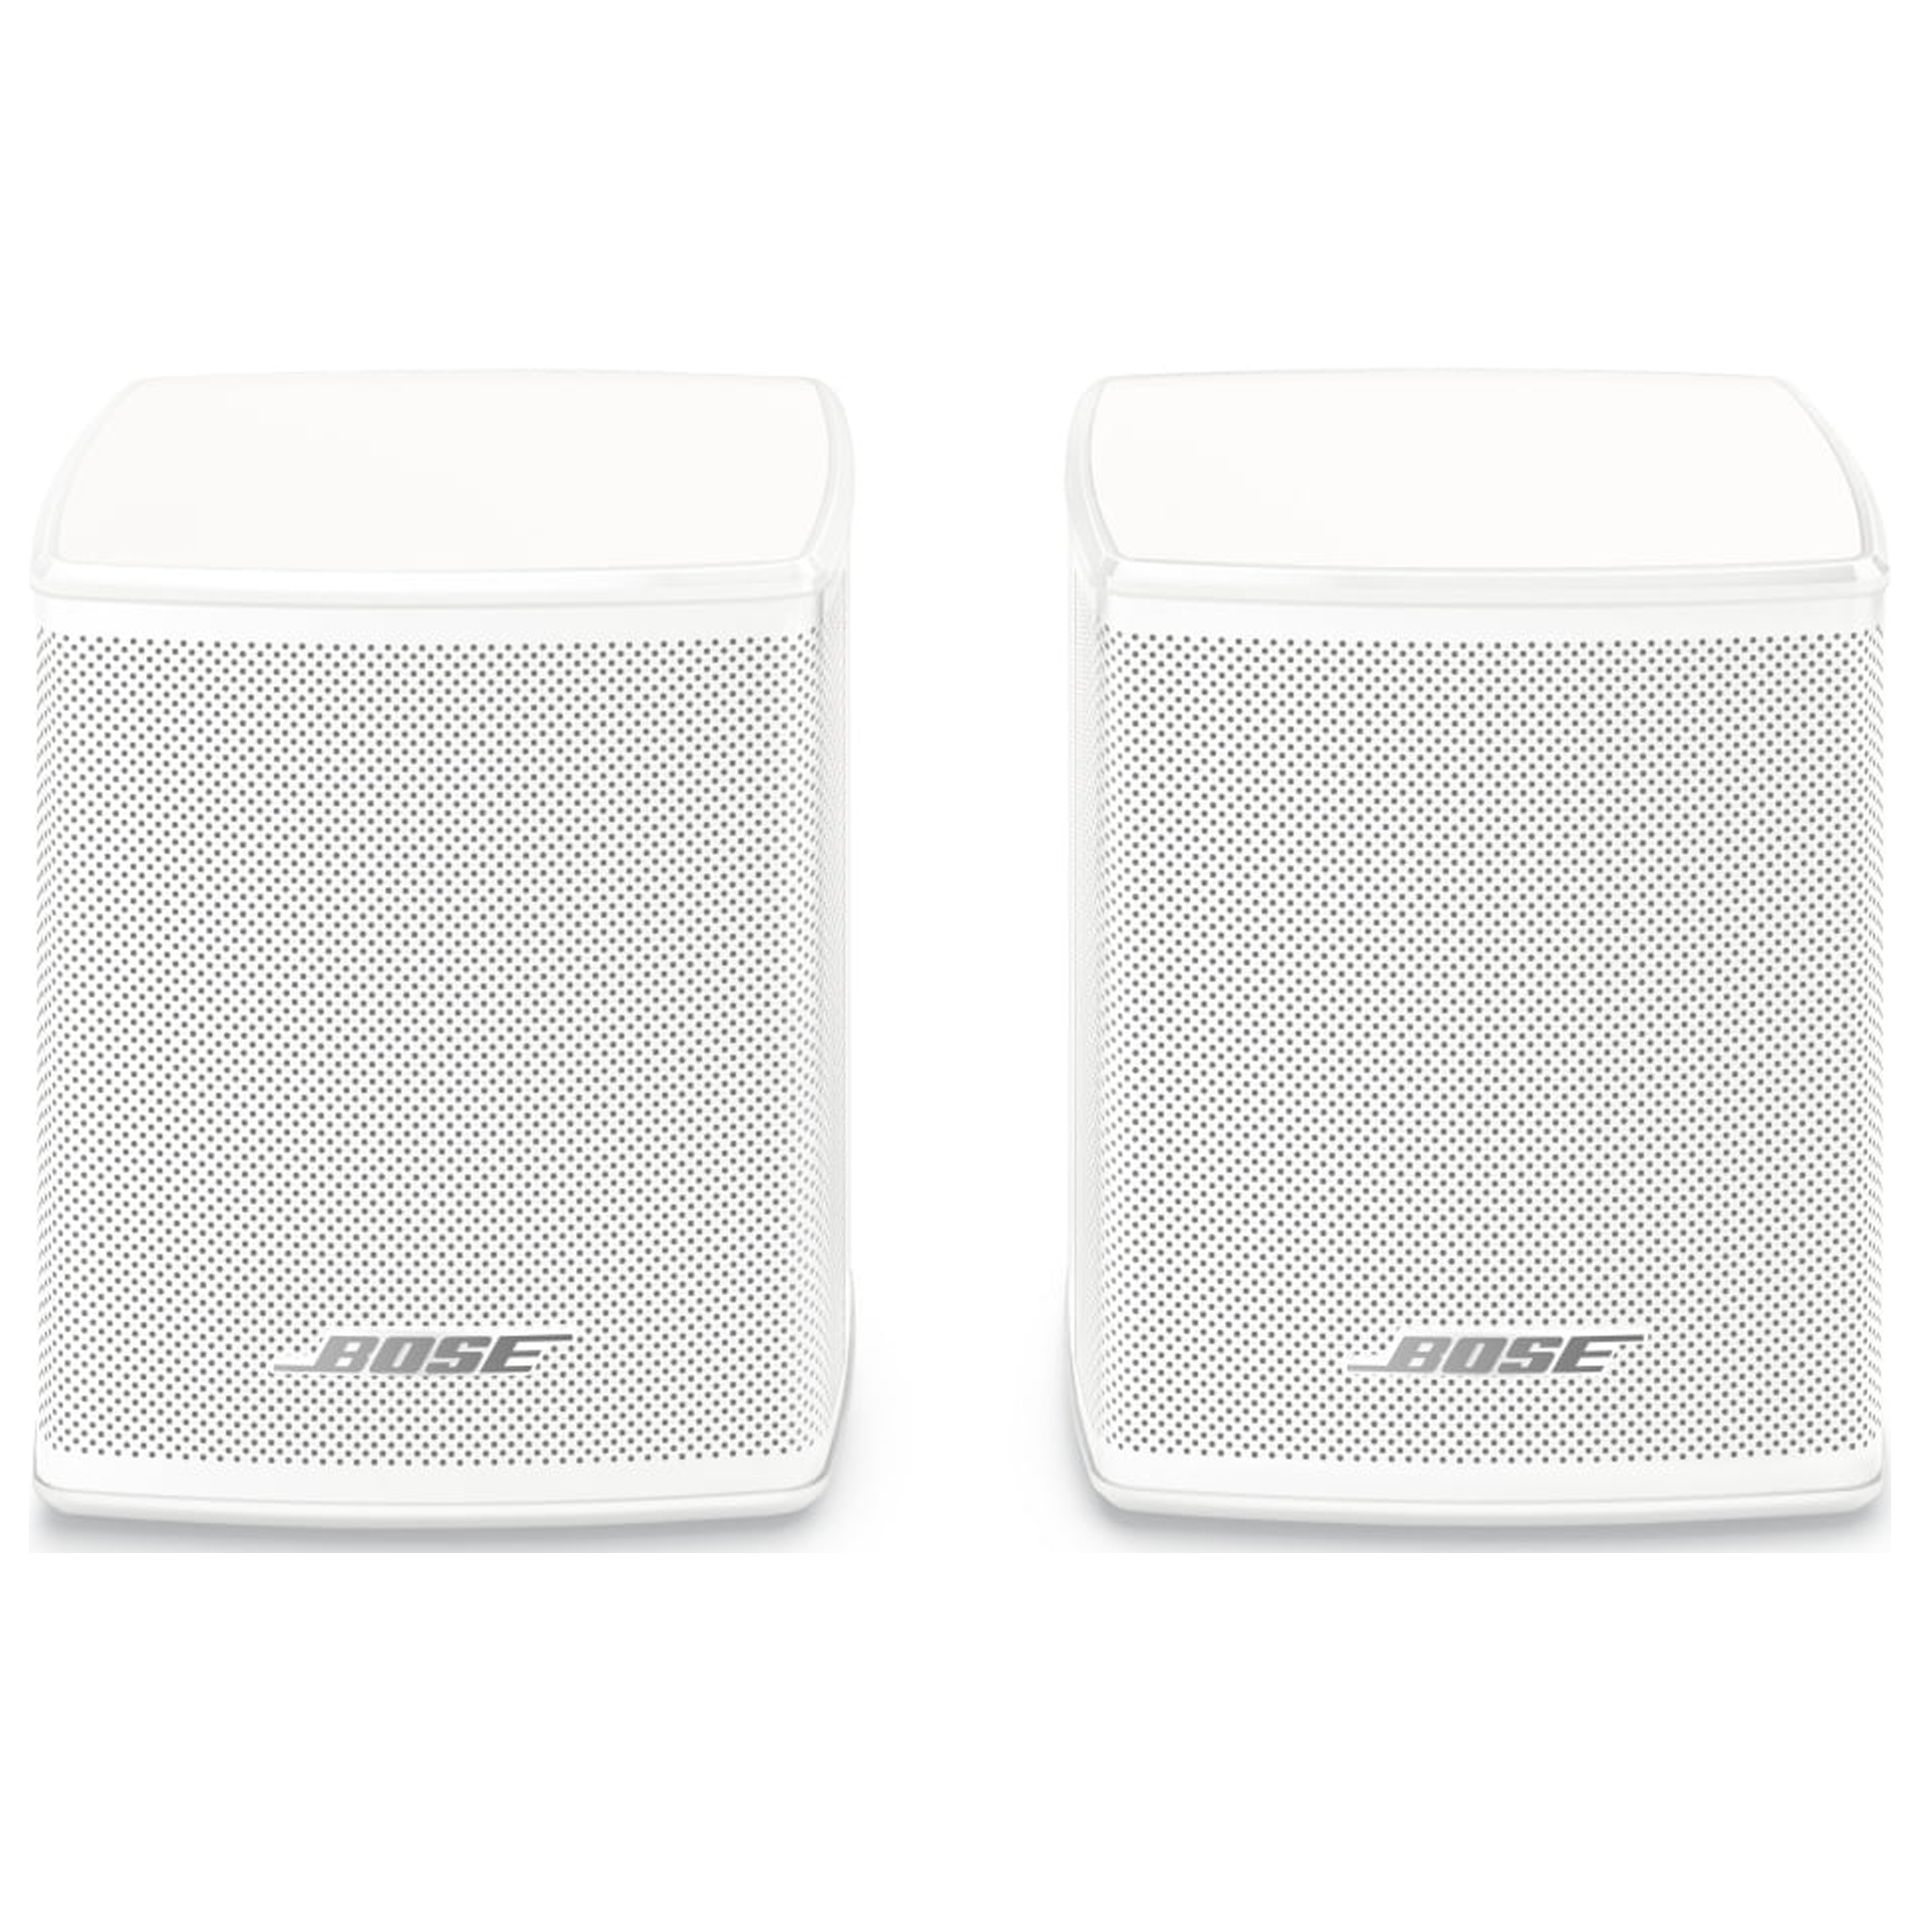 Bose Surround Sound Rear Speakers for Bose Soundbars, White - image 2 of 5